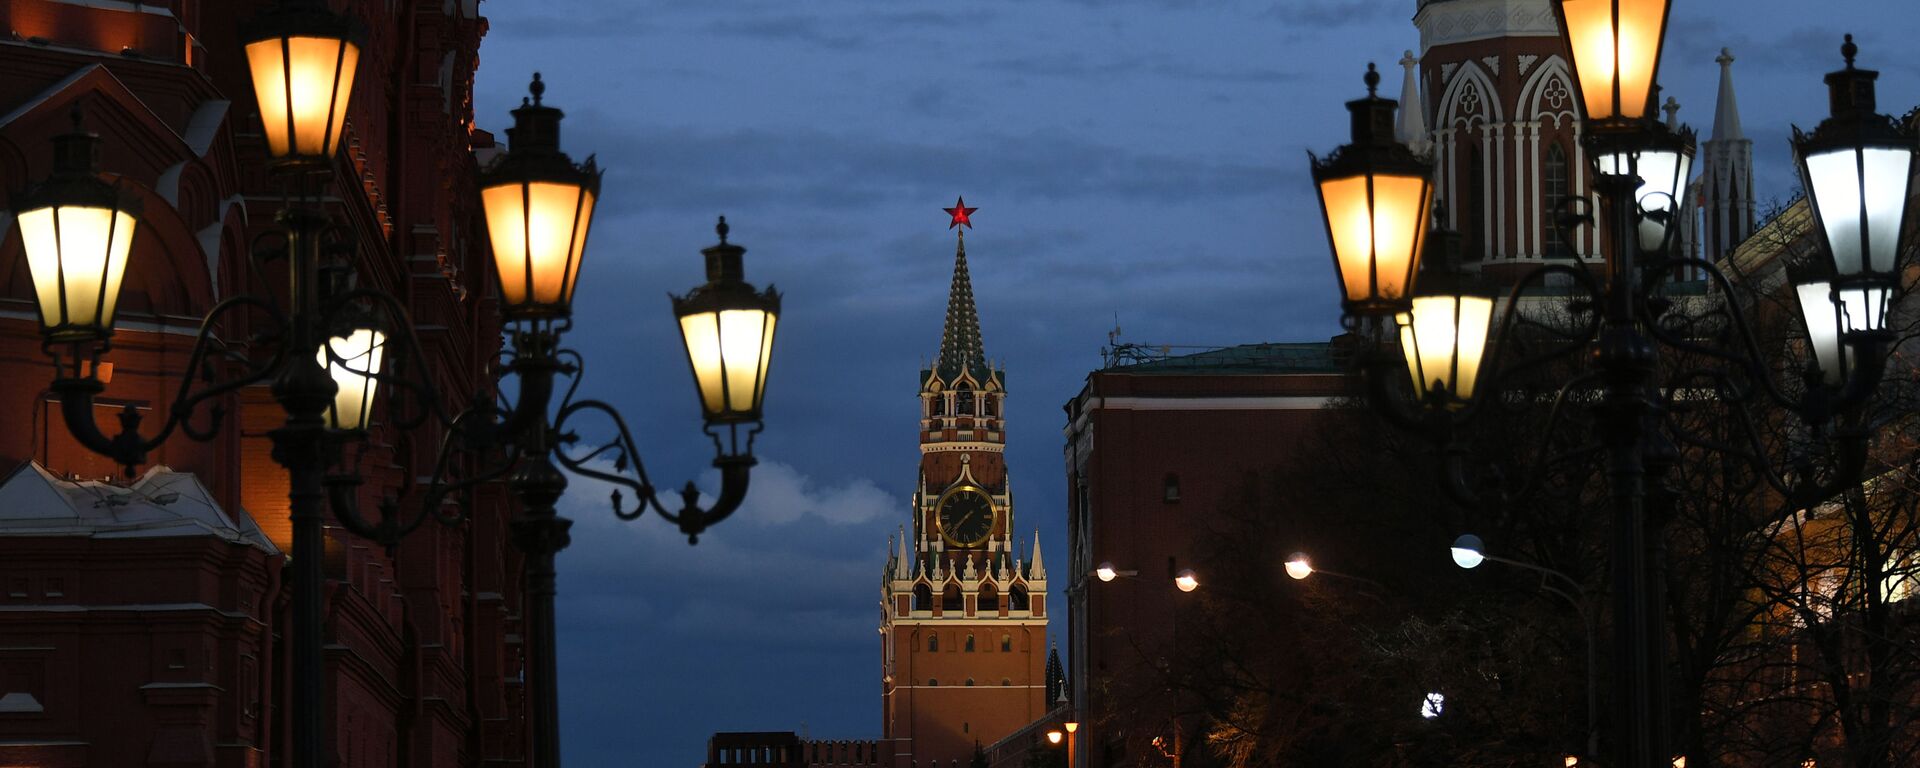 La Plaza Roja y el Kremlin de Moscú - Sputnik Mundo, 1920, 13.10.2021